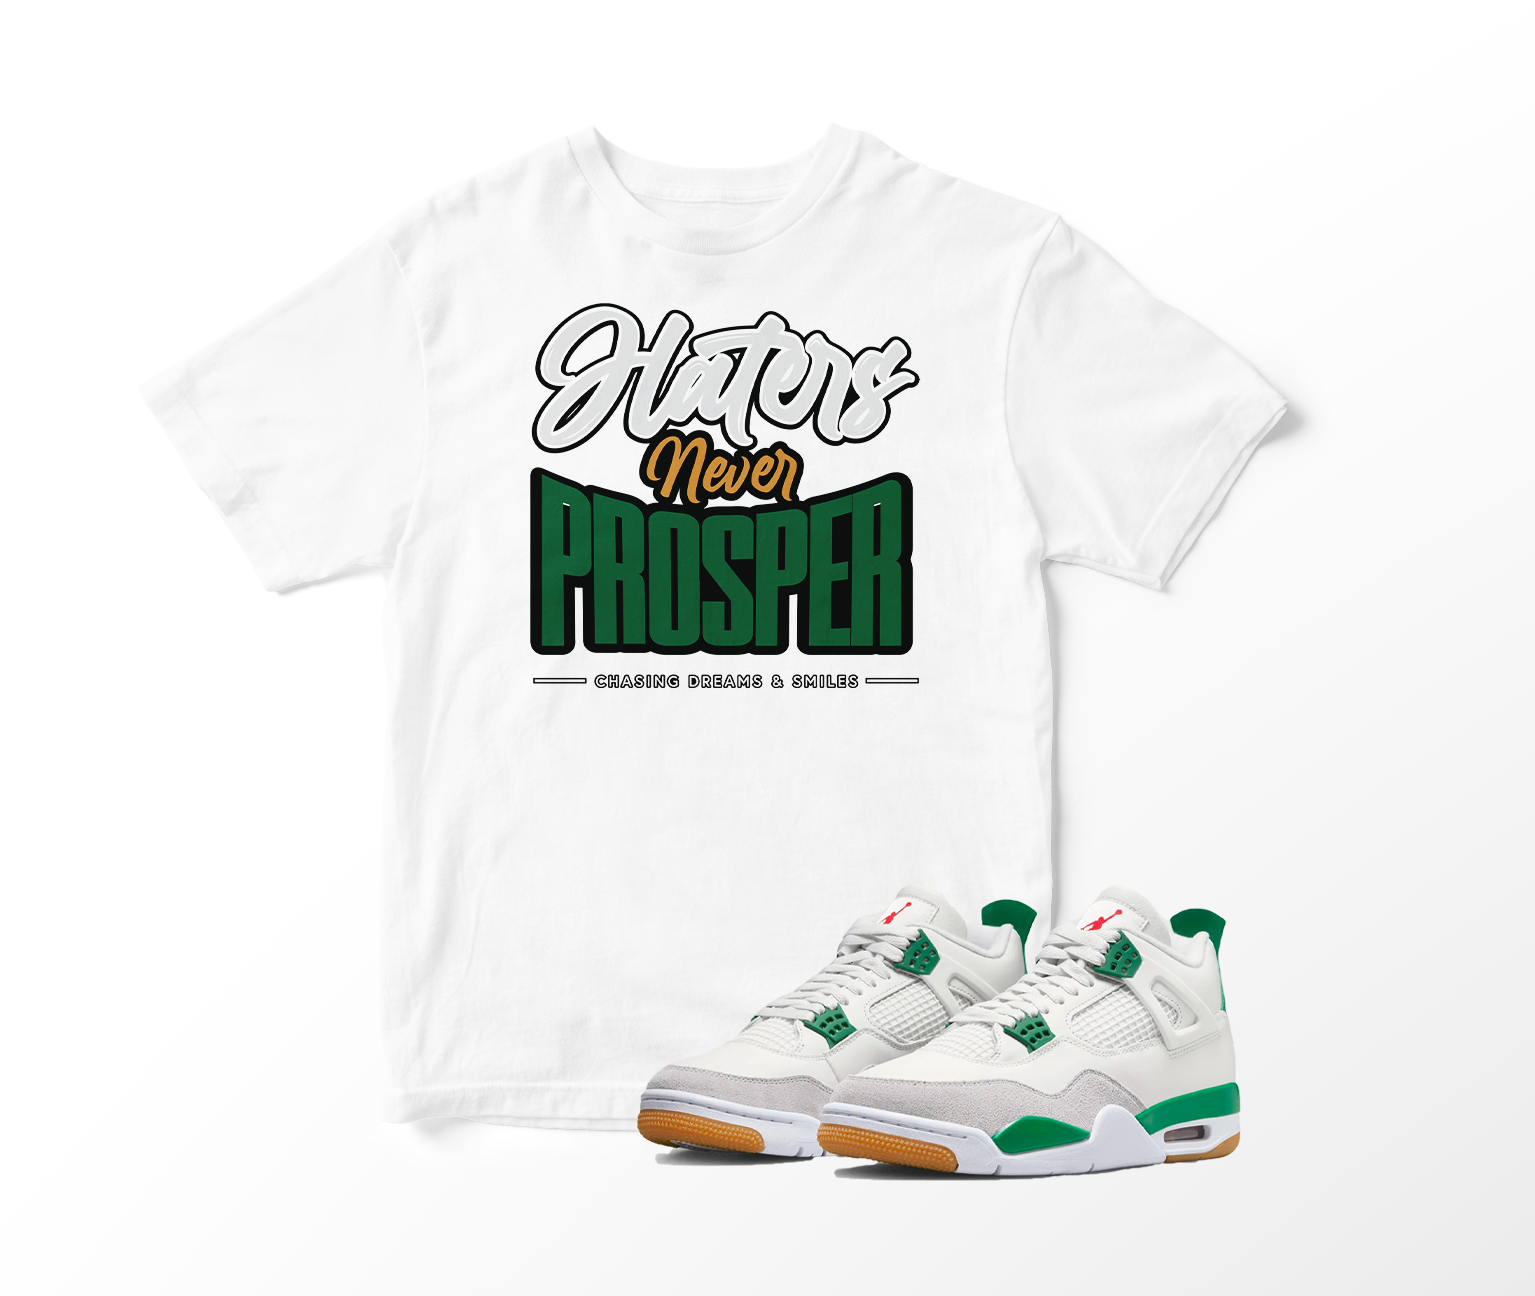 'Haters Never Prosper' Custom Graphic Short Sleeve T-Shirt To Match Air Jordan 4 Pine Green